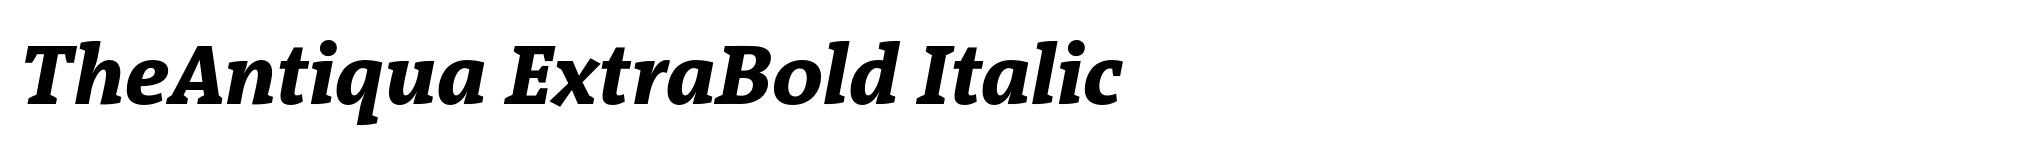 TheAntiqua ExtraBold Italic image